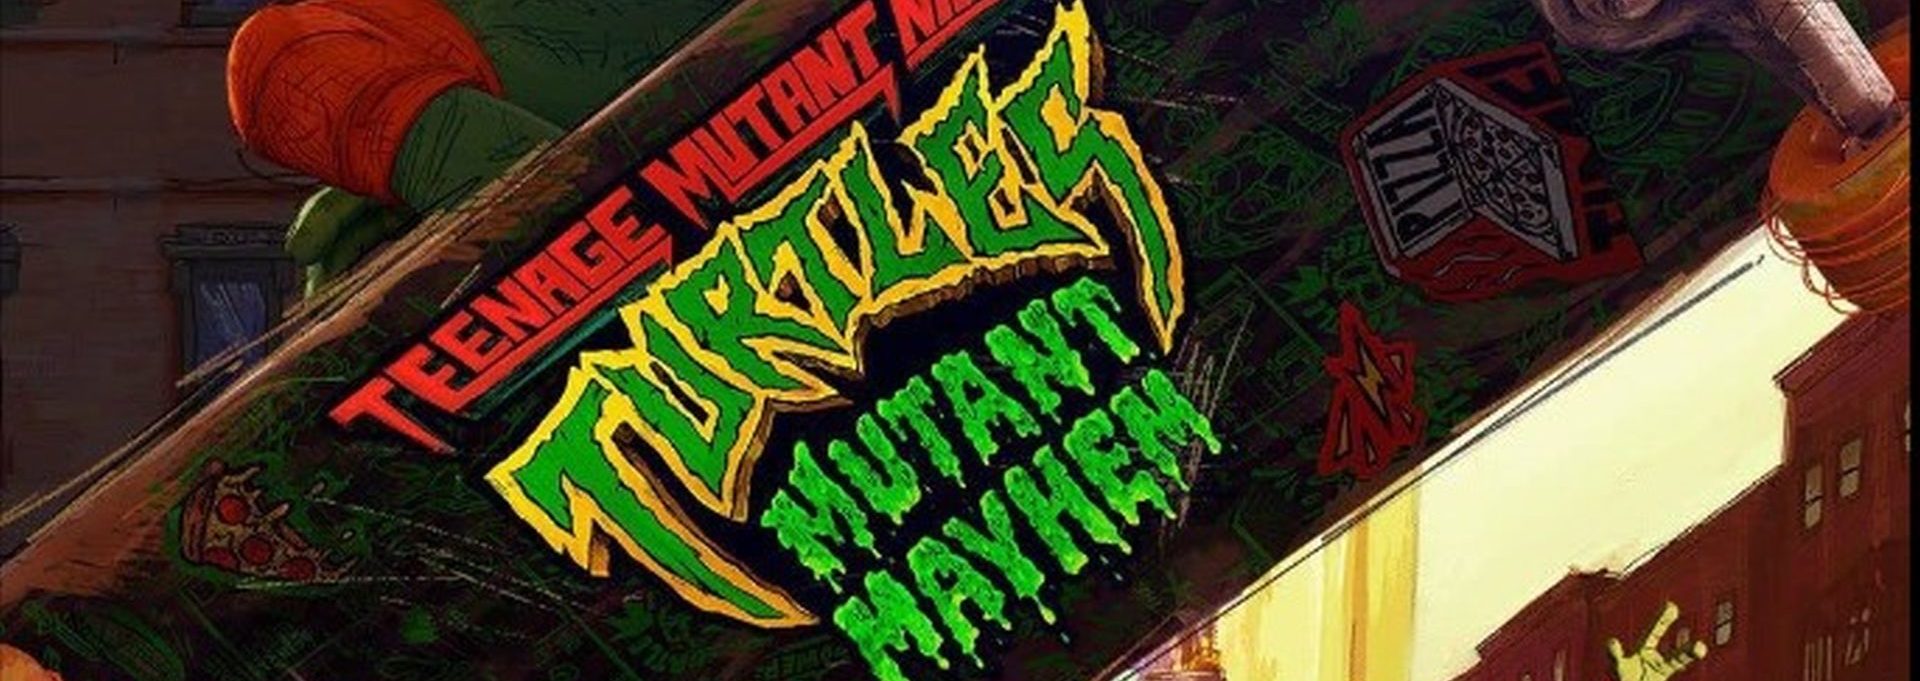 Teenage Mutant Ninja Turteles - Mutant Mayem - Trailer